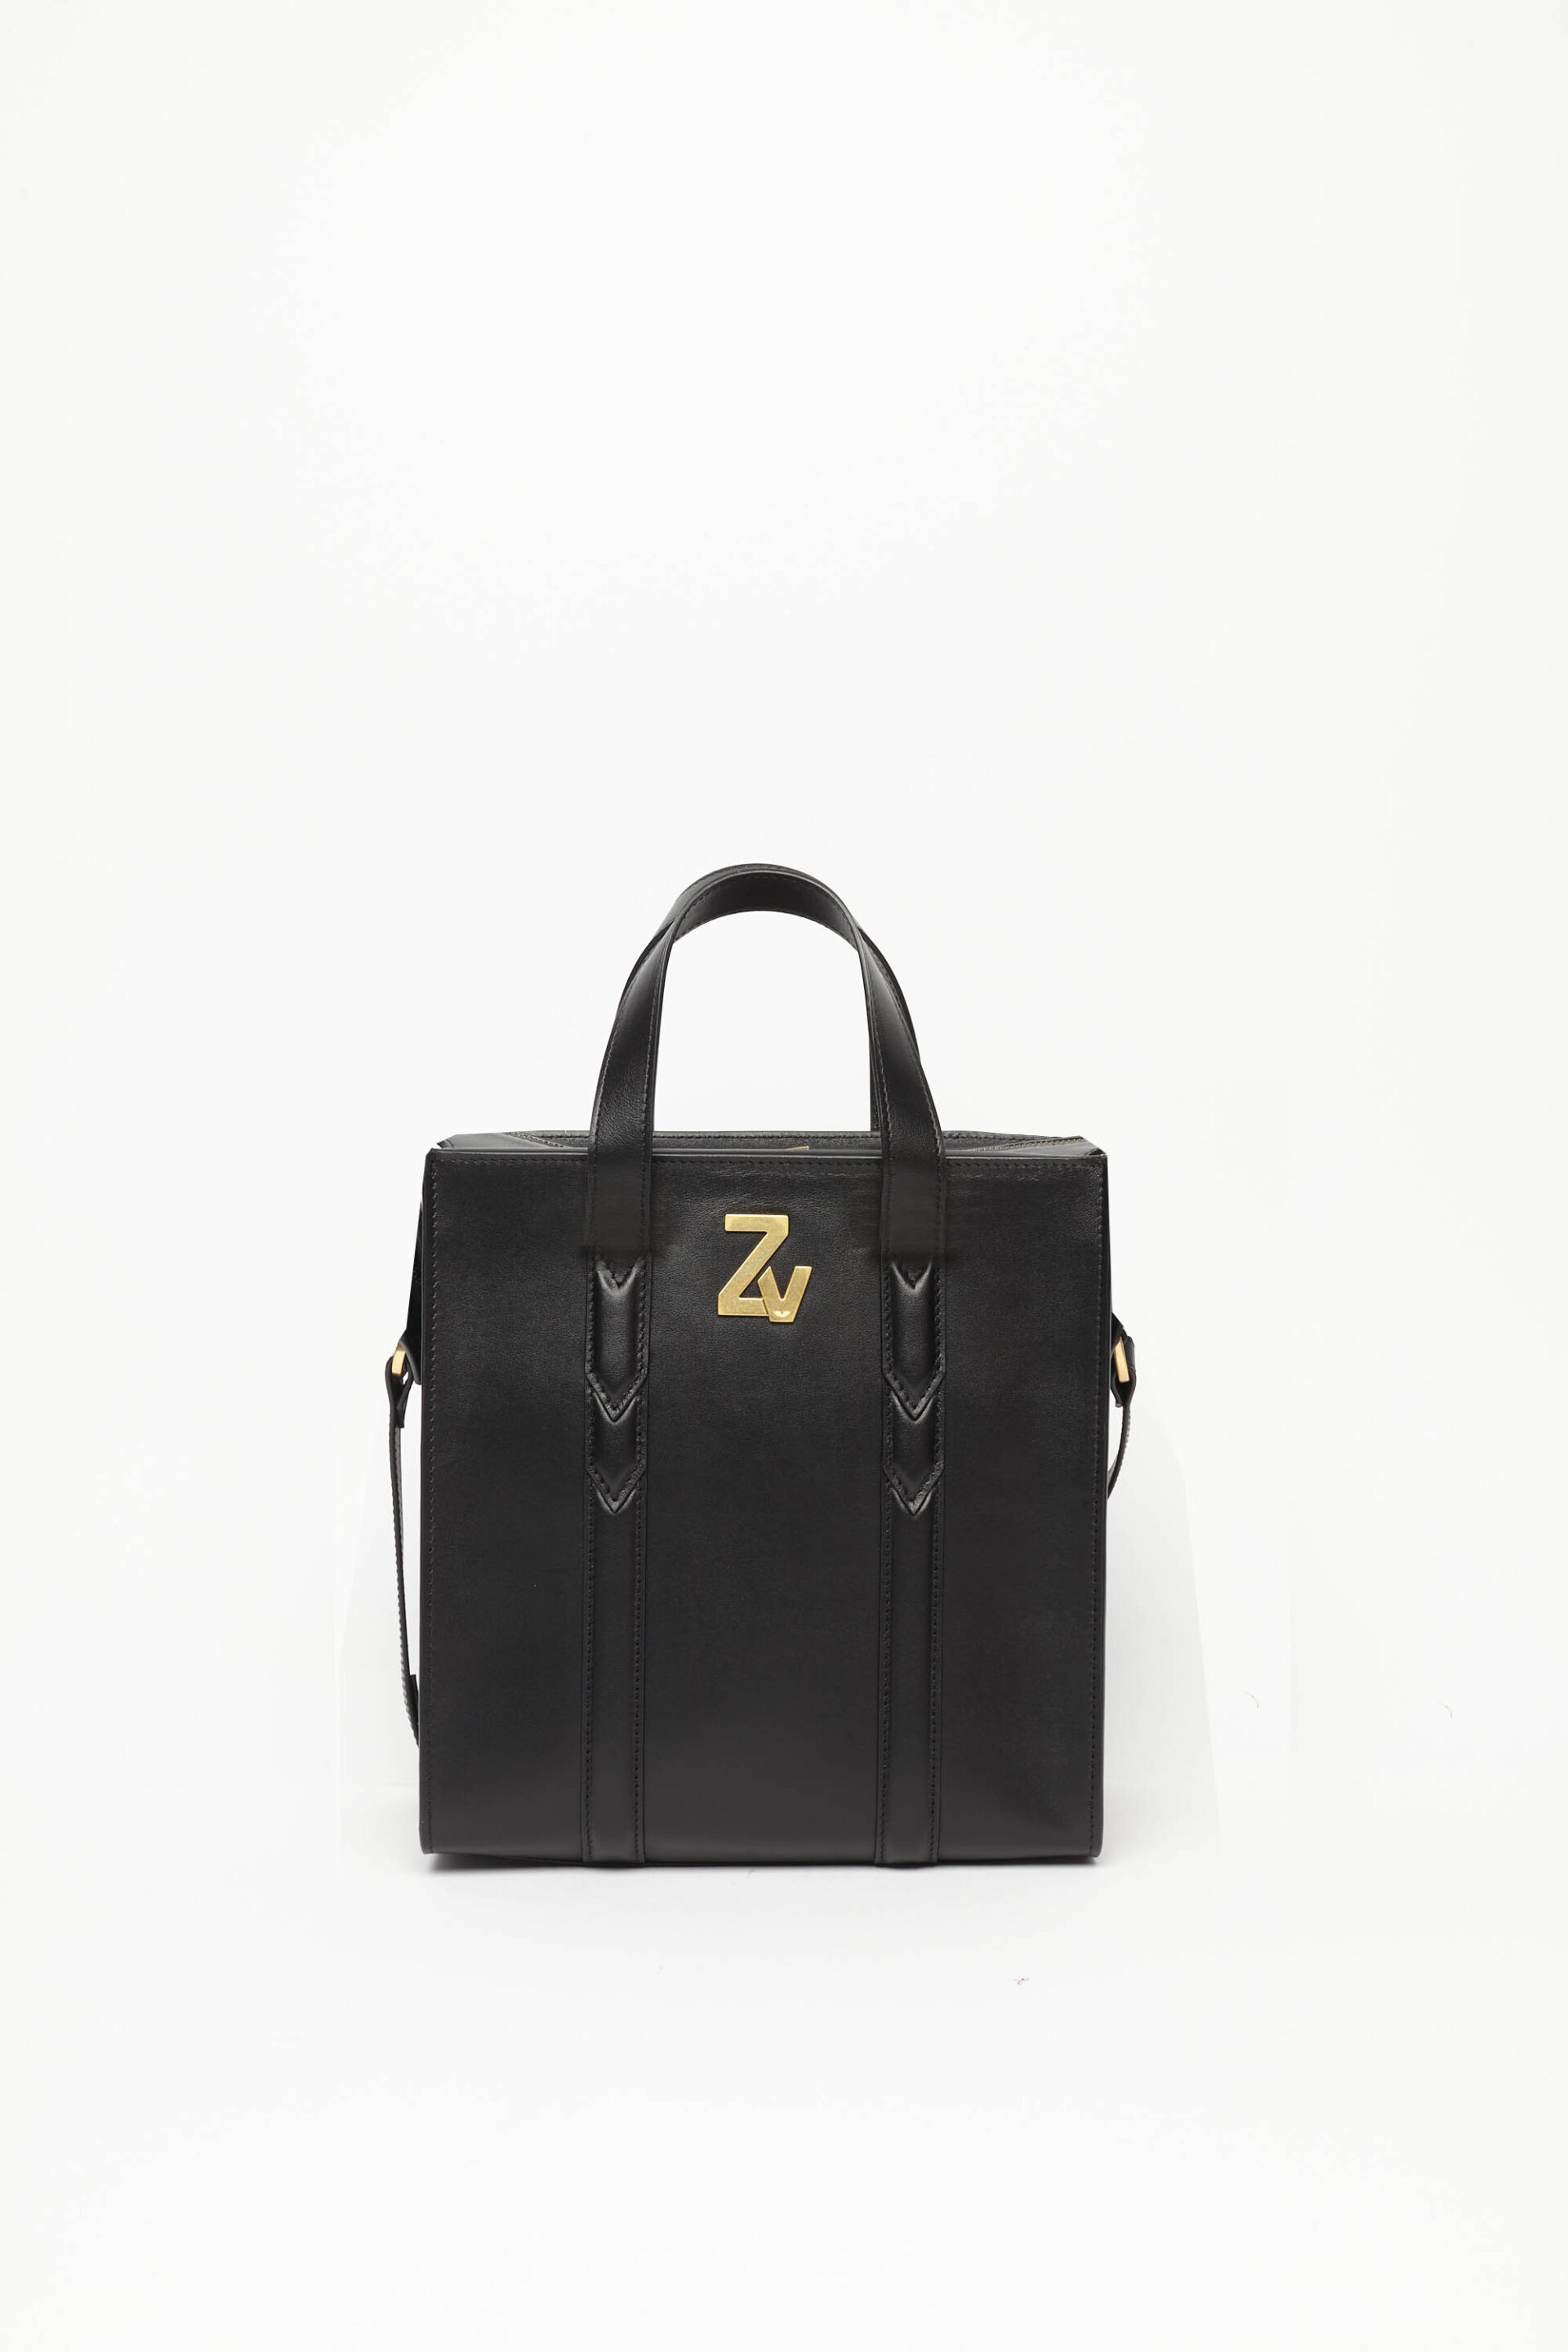 Zv Initiale Le Mini Hobo Bag - Zadig & Voltaire - Black - Leather